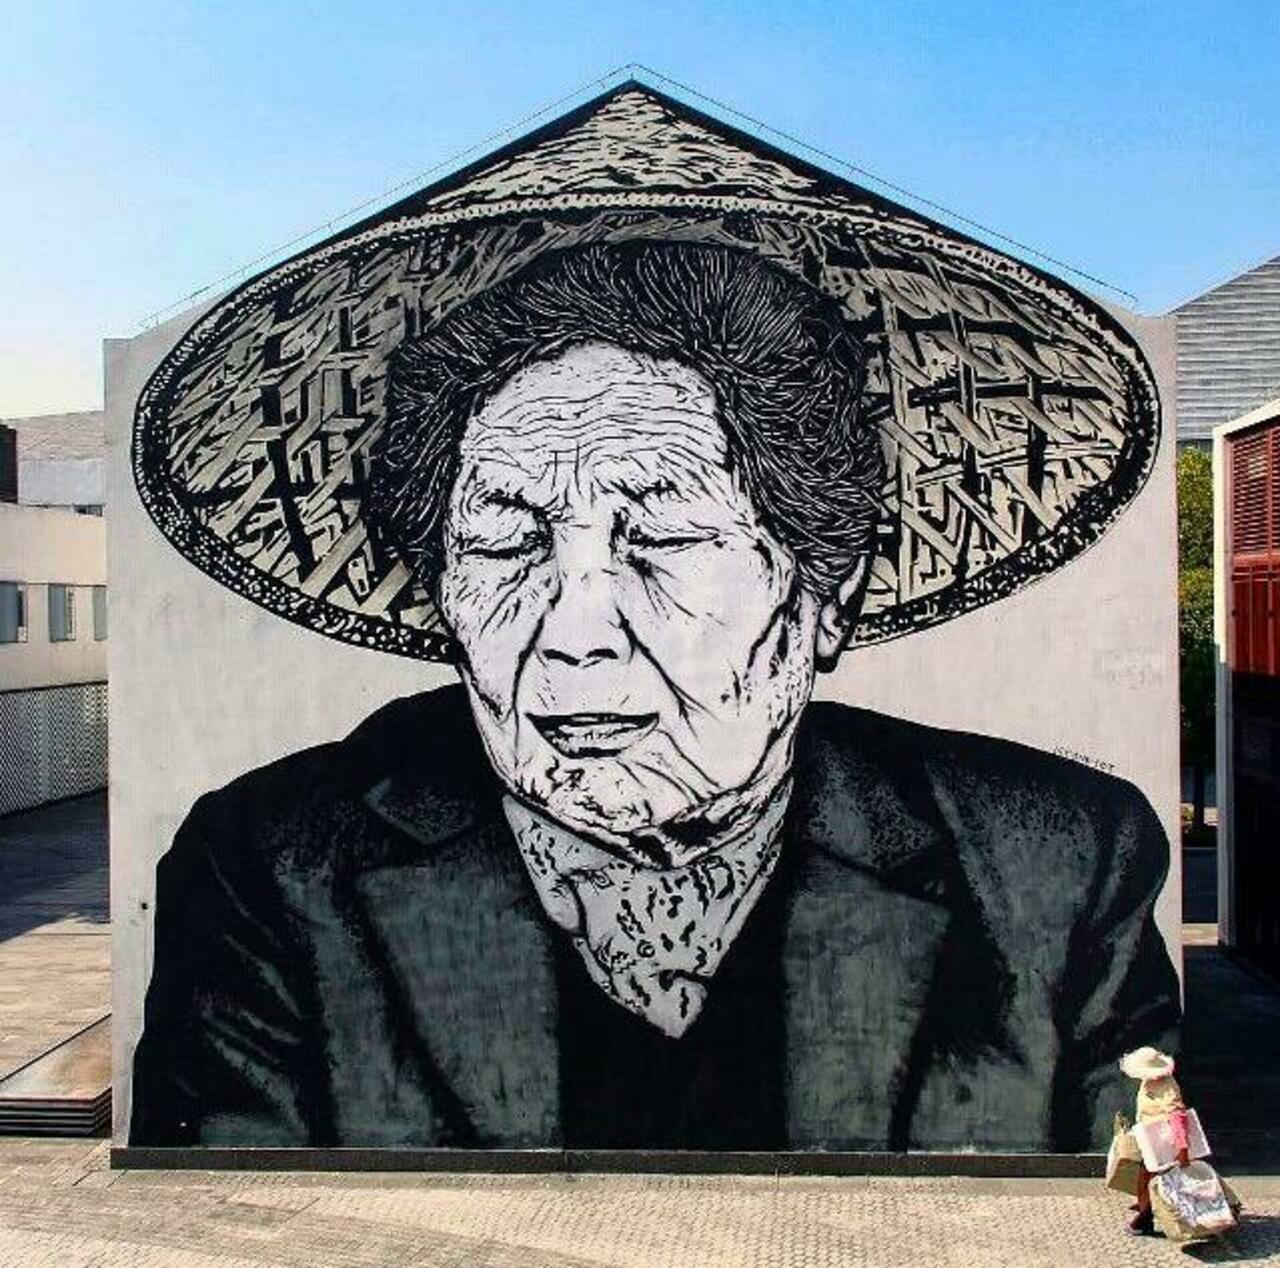 New Street Art by icy&sot in Shanghai  

#art #graffiti #mural #streetart http://t.co/YykEV0RApt